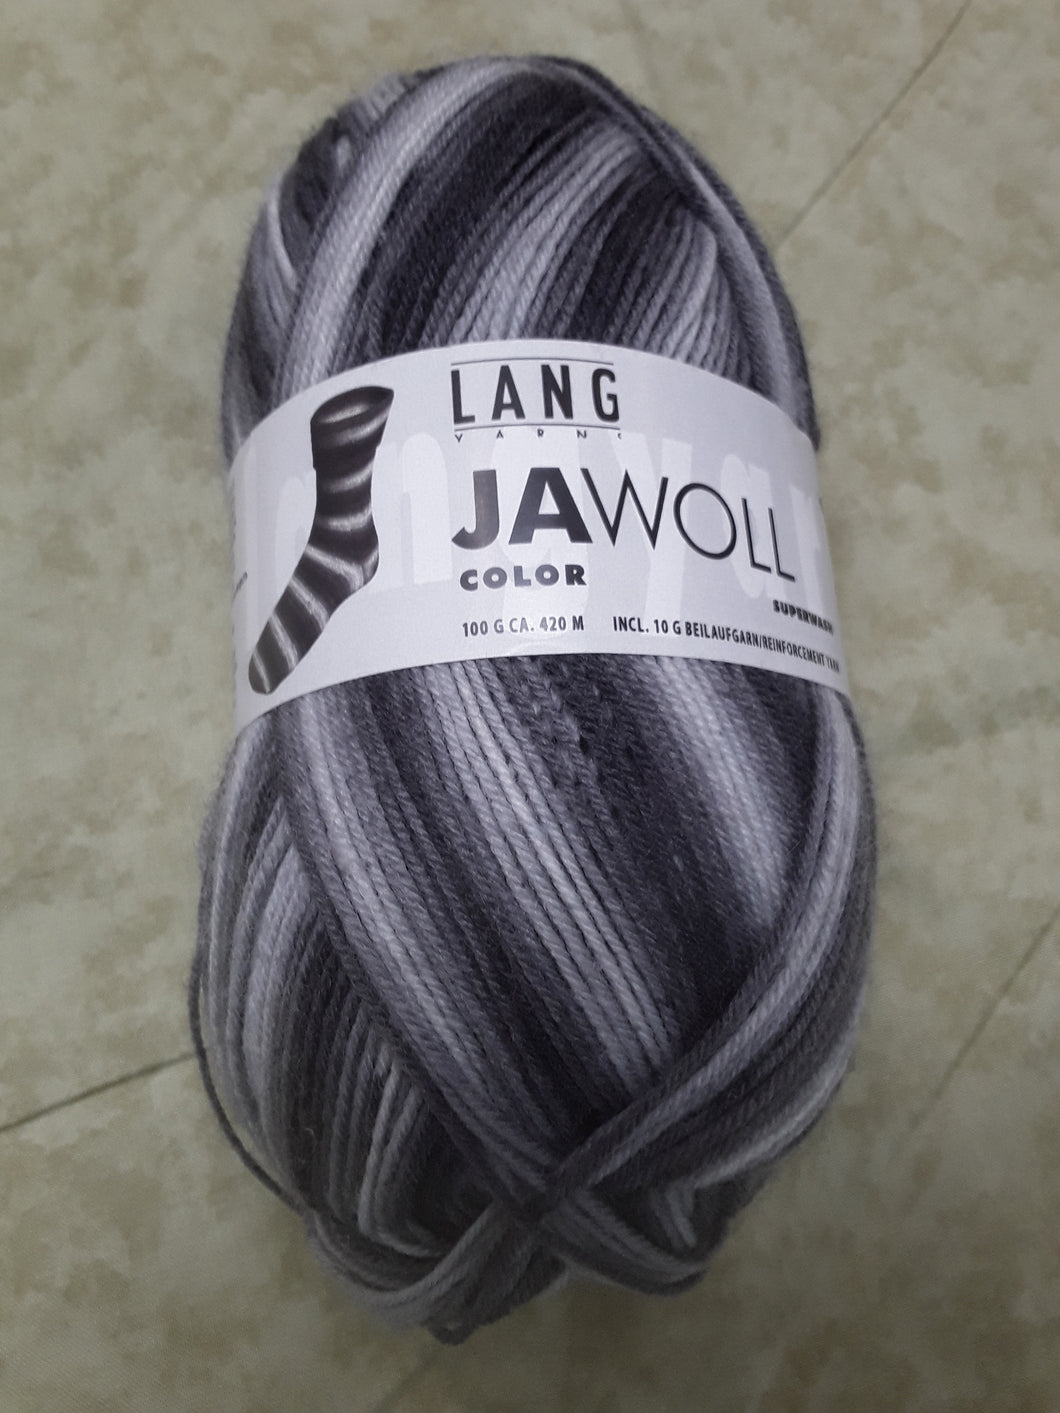 Jawoll Superwash Color